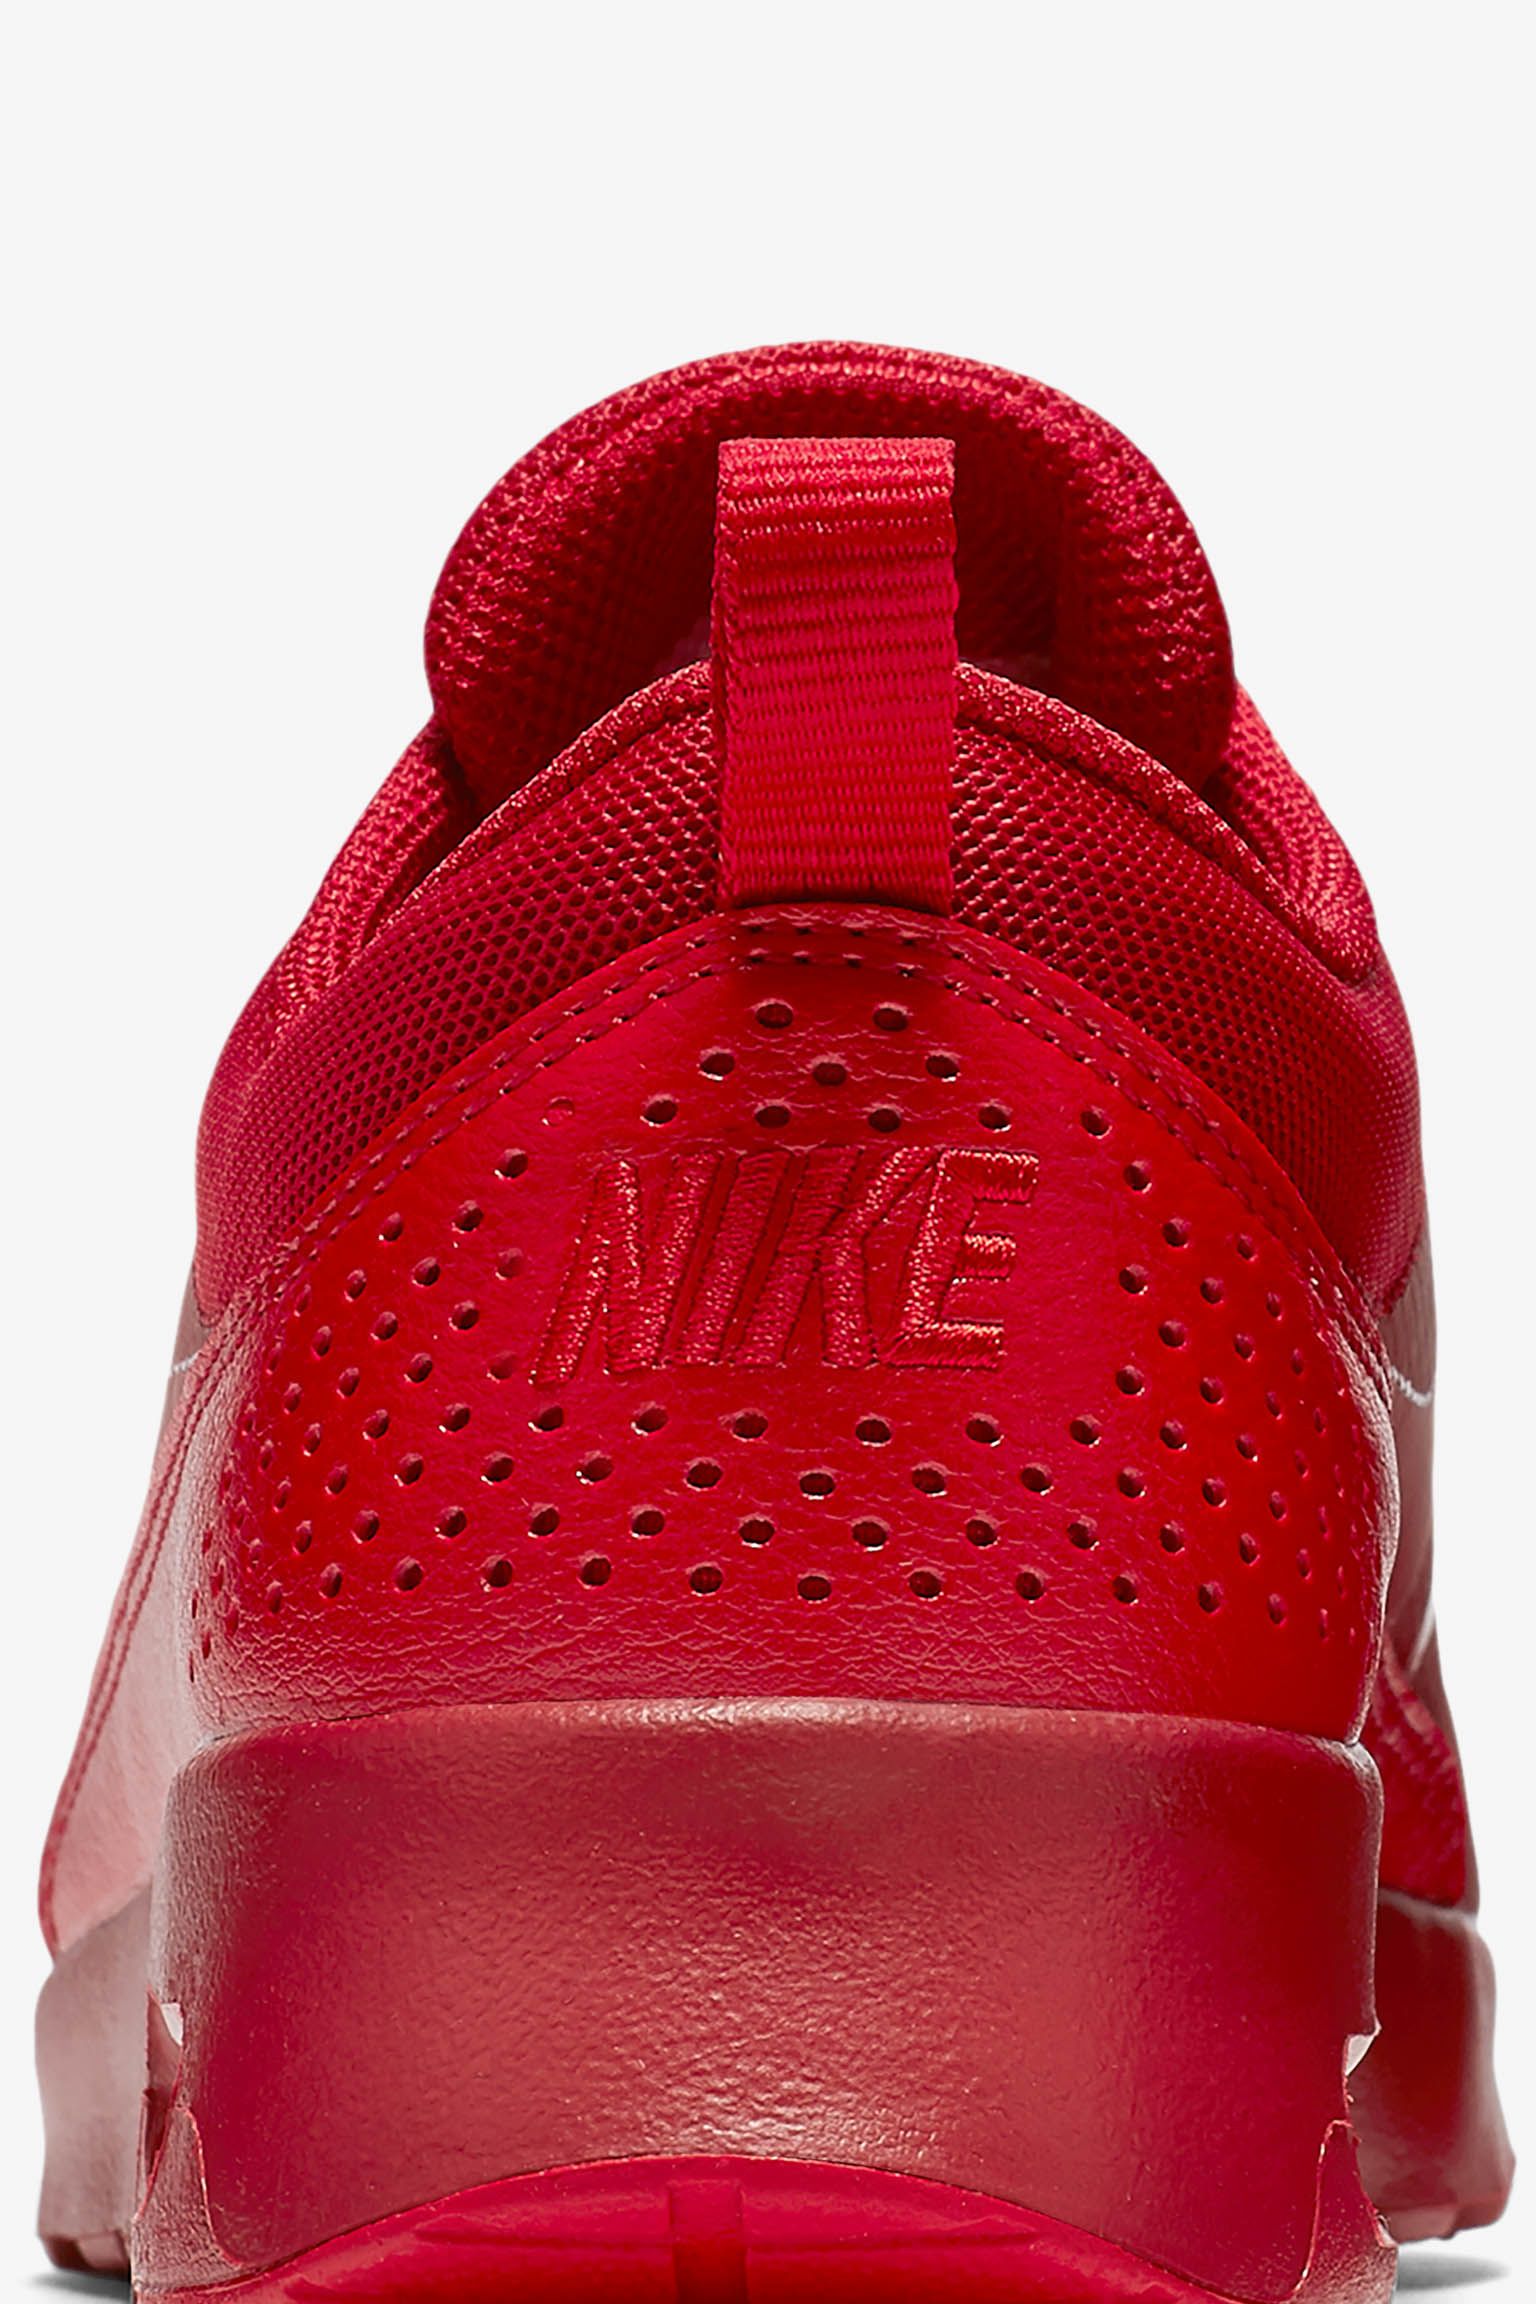 Women's Nike Air Max Thea 'Ruby Red'. Nike SNKRS كريم اليدين افالون